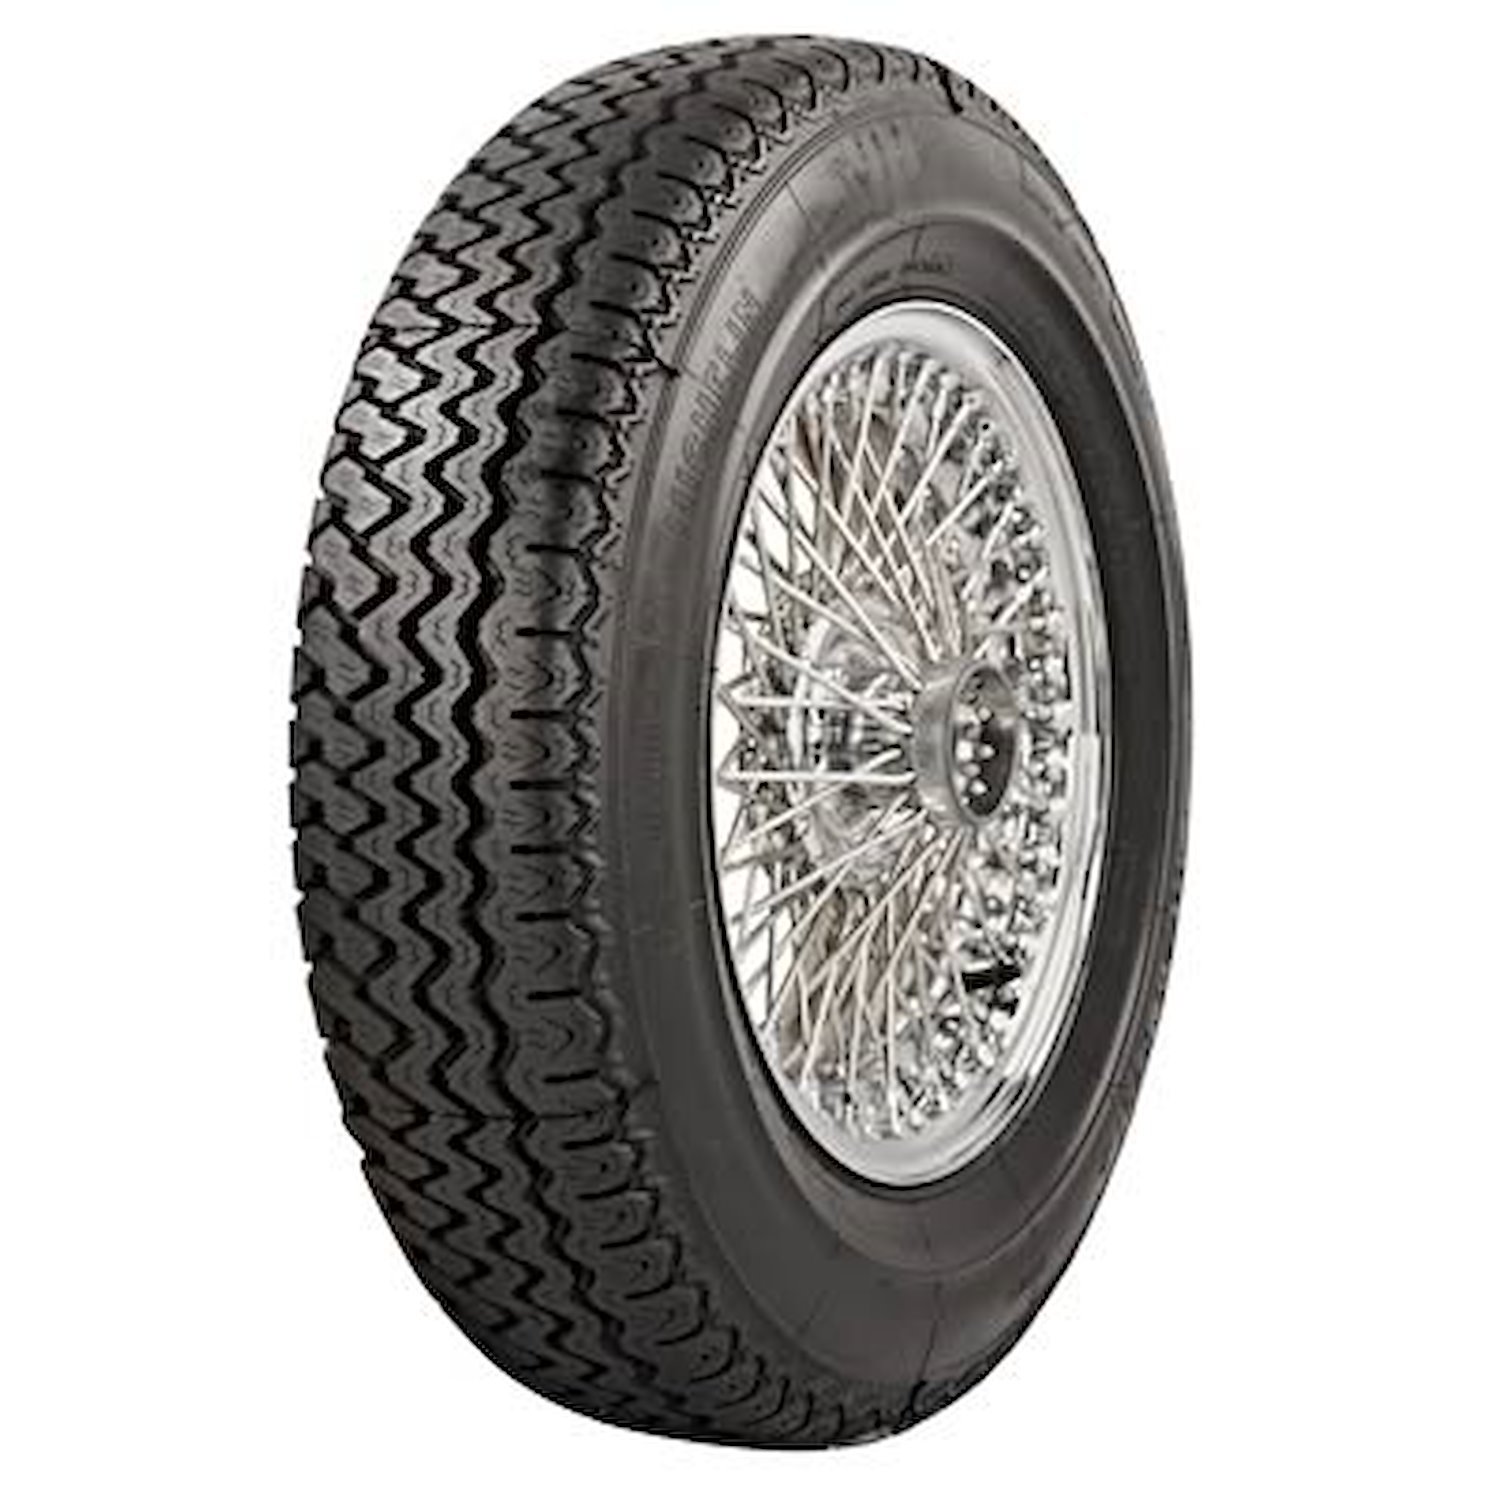 579871 Tire, Michelin XVS, 185HR15 93H